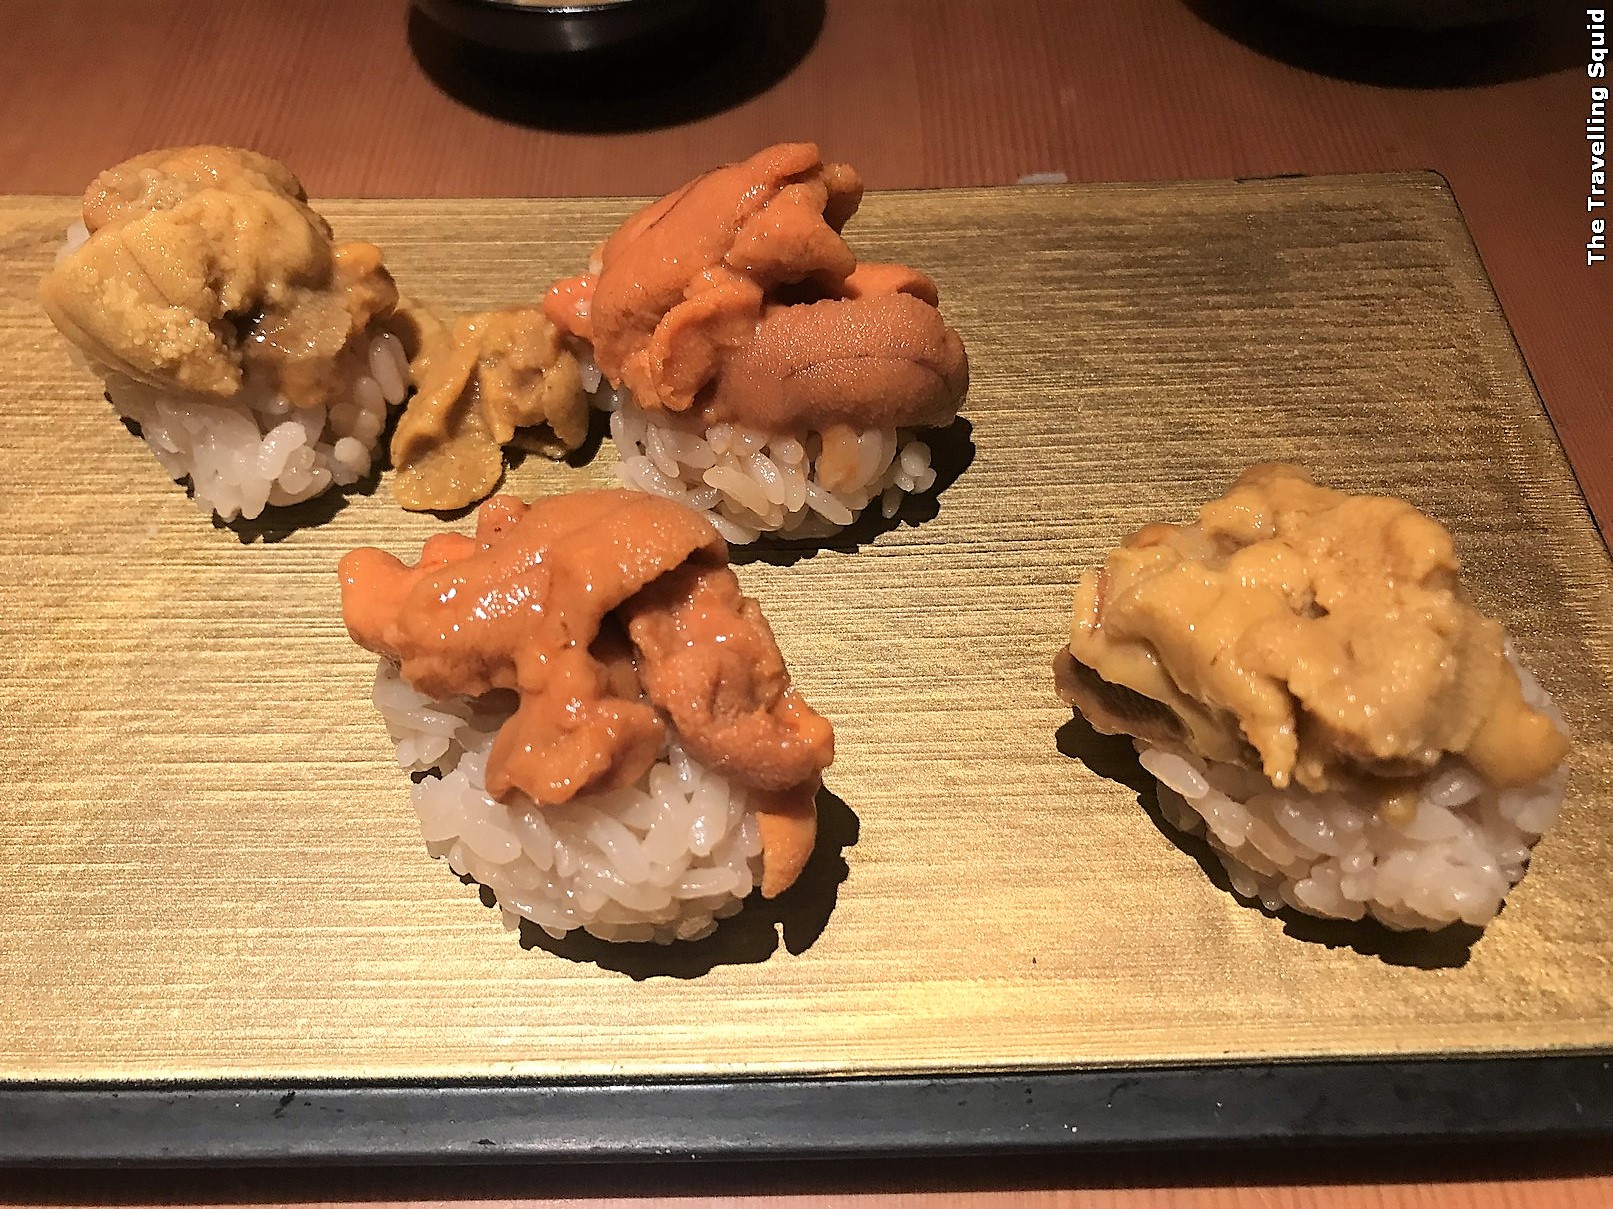 contemporary sushi at Manten Sushi in Tokyo